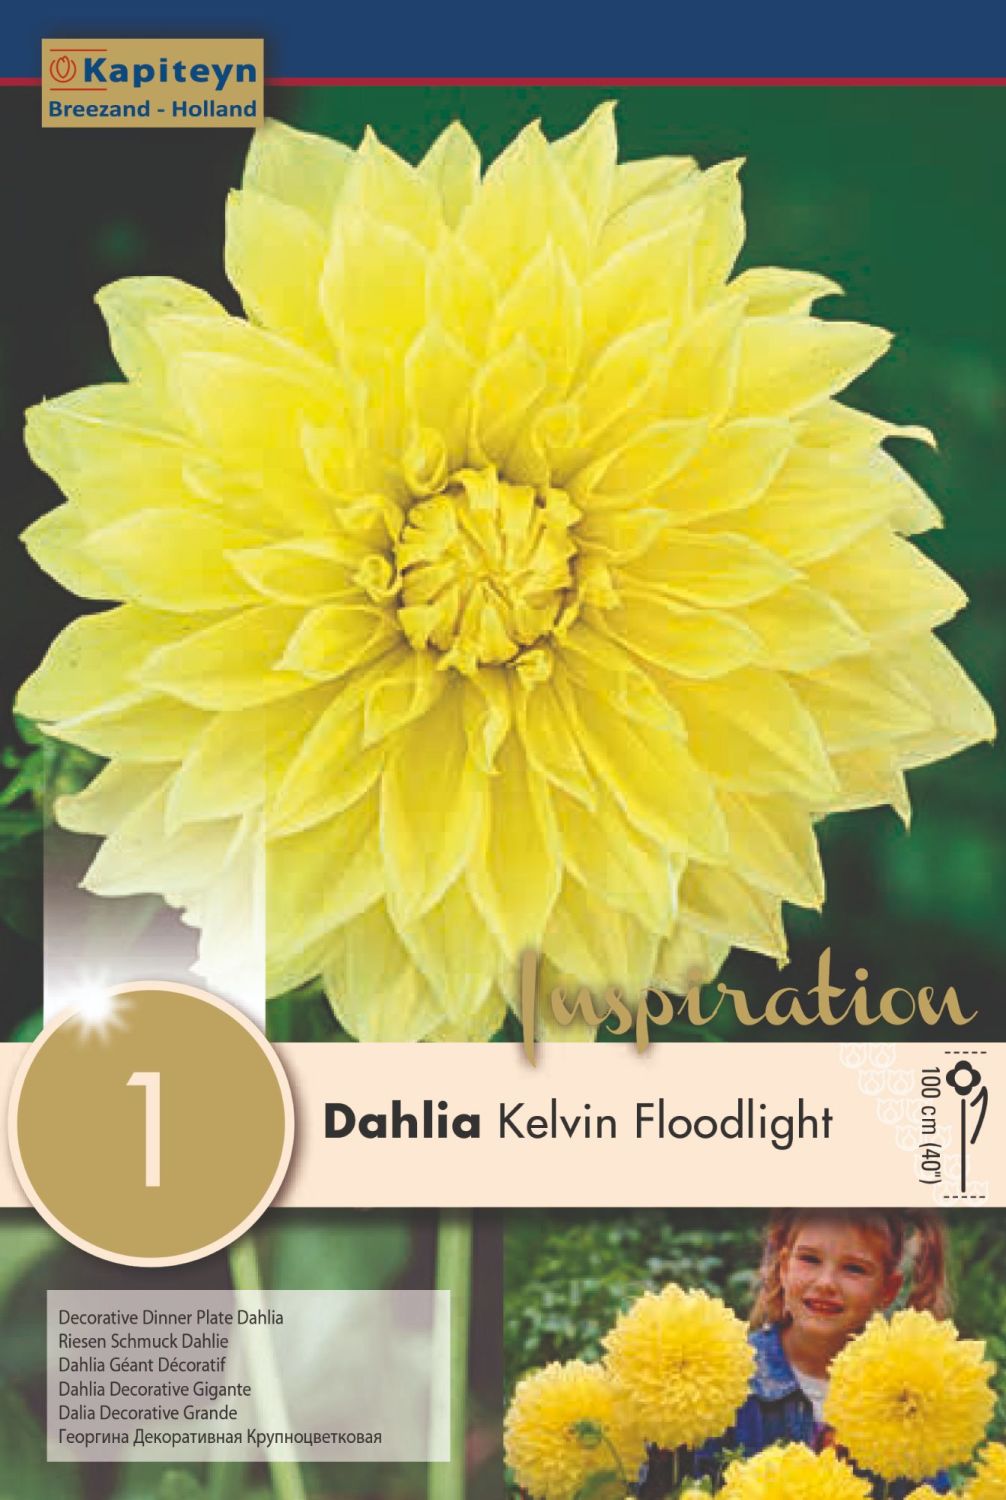 DAHLIA KELVIN FLOODLIGHT